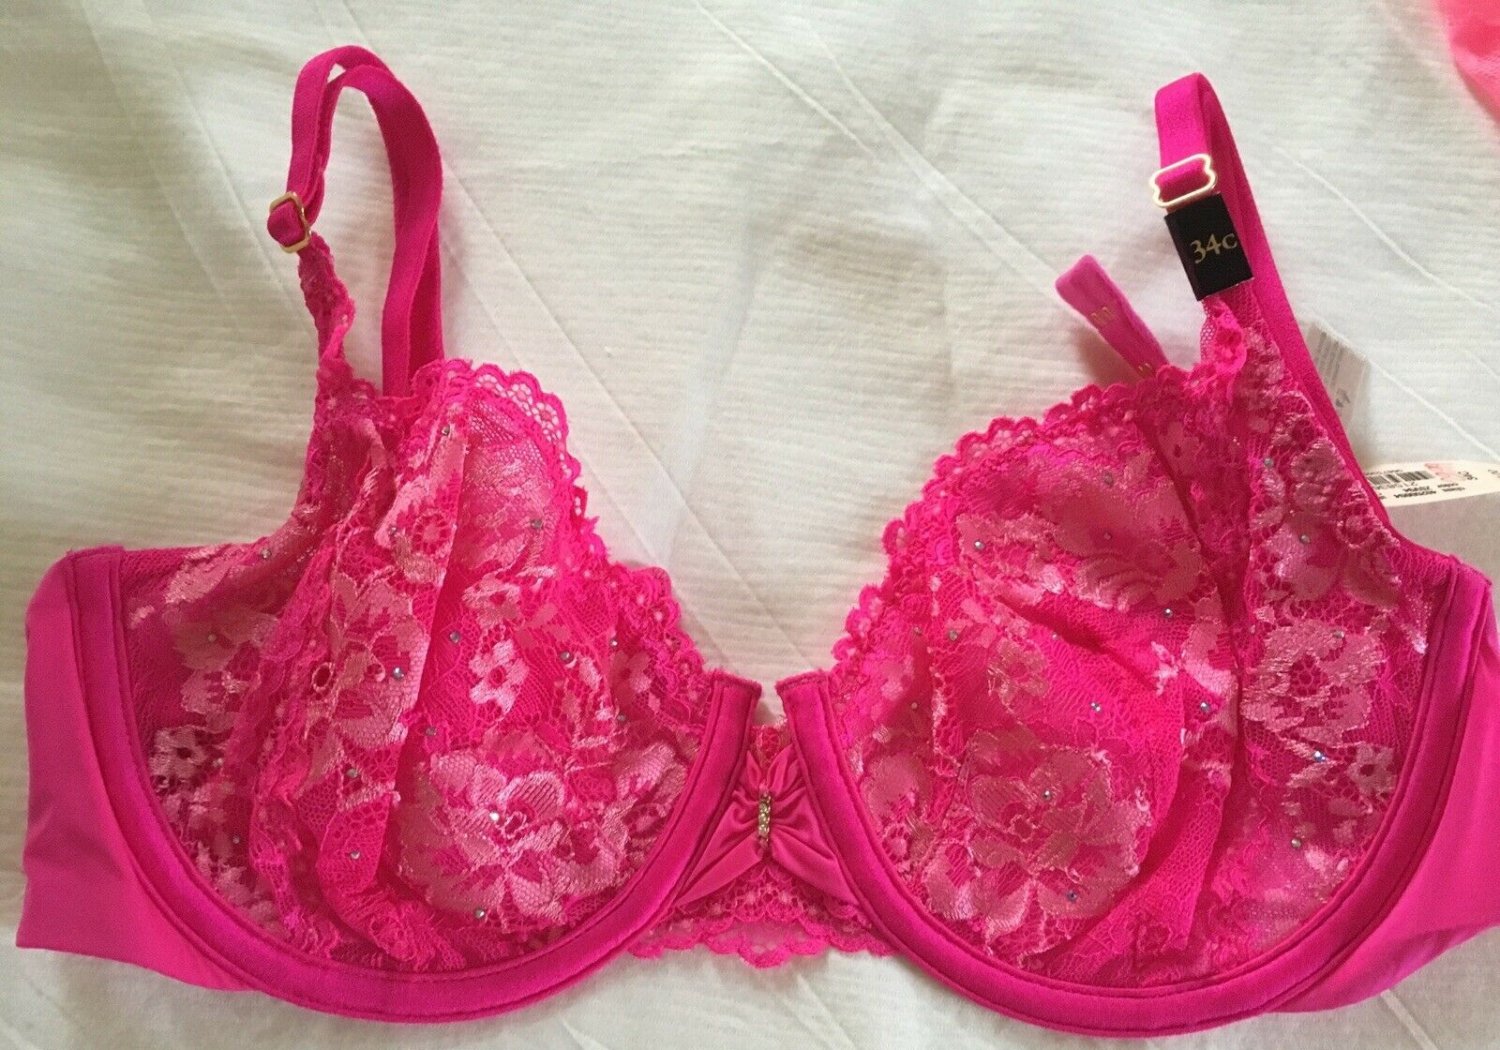 Nwt Victorias Secret Embellished Bra 34c Hot Pink Lace